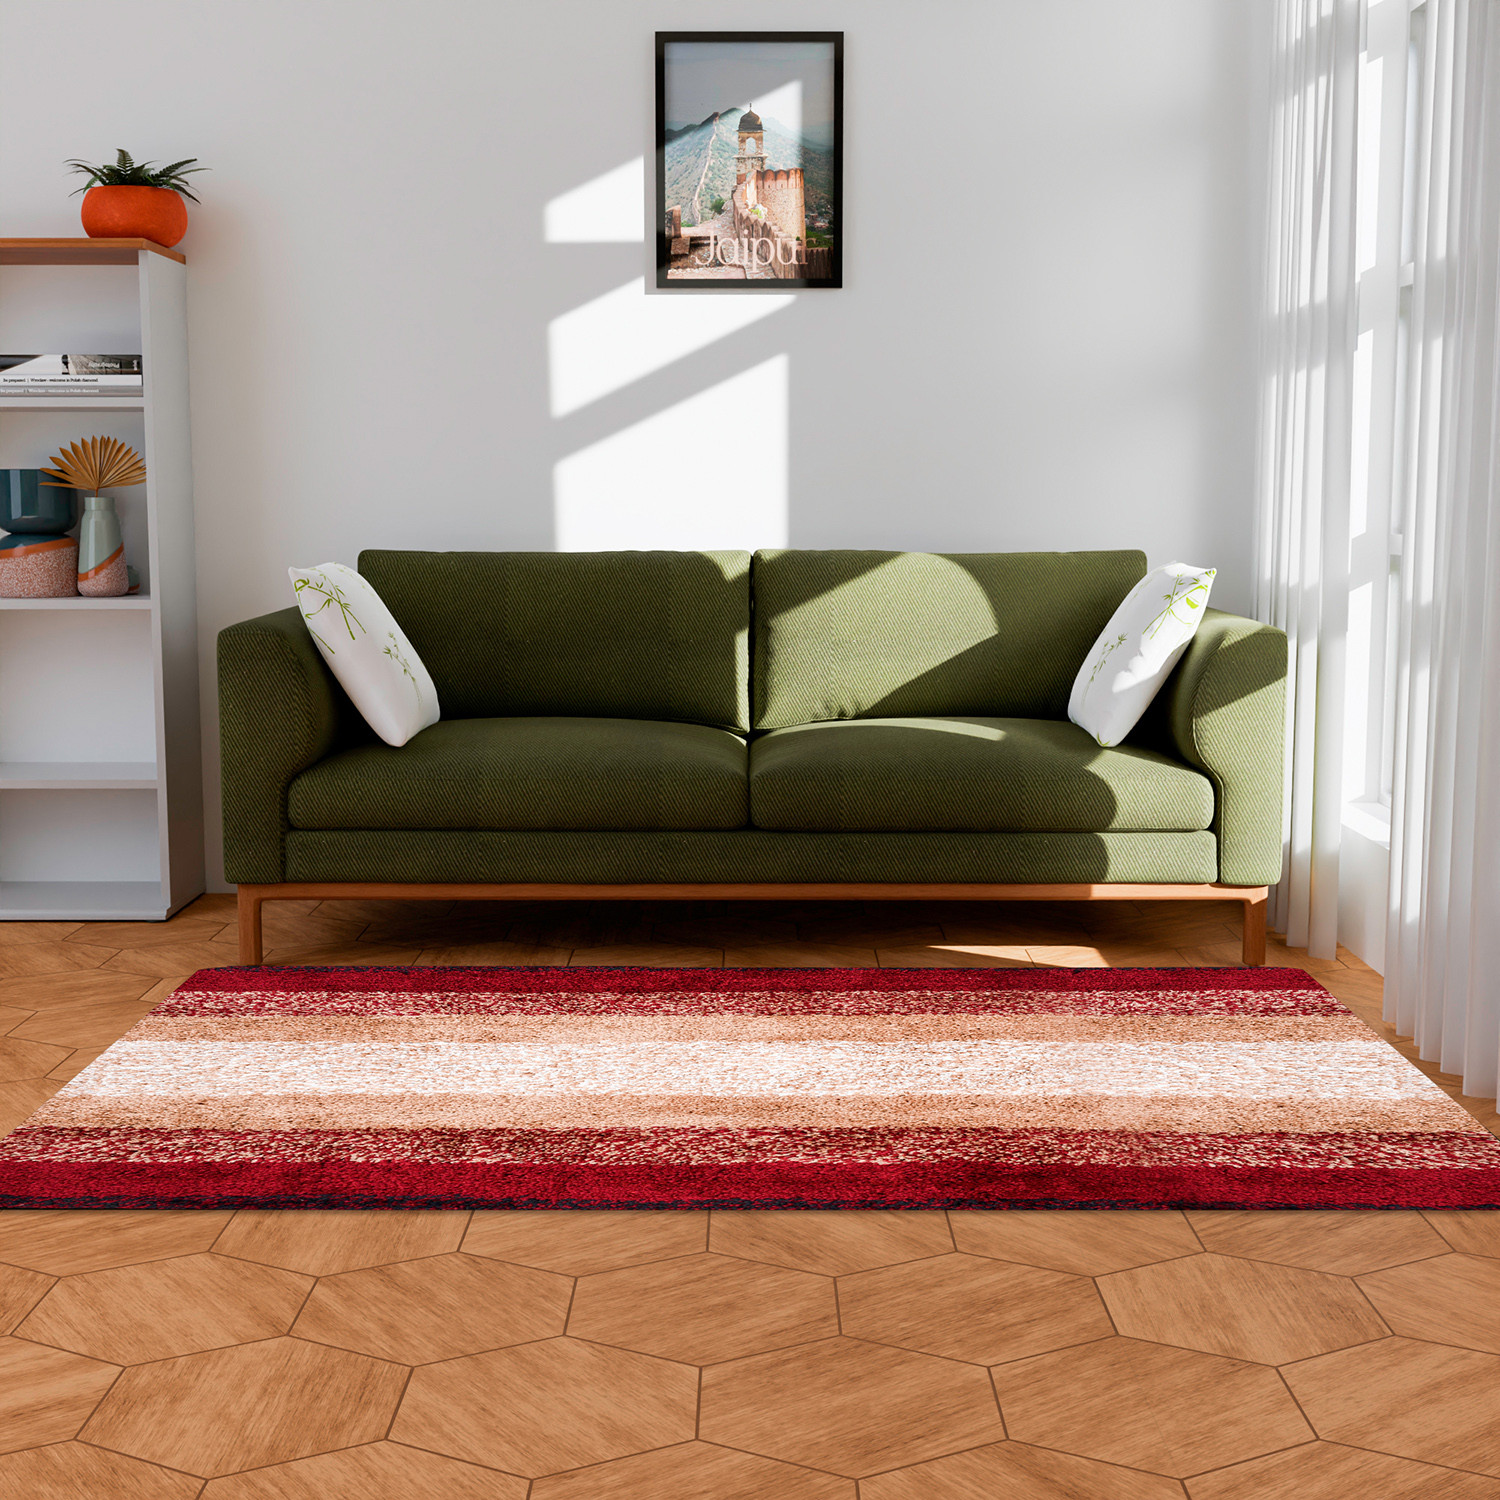 Kuber Industries Carpet | Shaggy Carpet for Living Room | Fluffy Carpet for Bedroom | Maroon Patta Rainbow Carpet | Floor Carpet Rug | Non-Slip Bedside Rug | 3x5 Feet | Cream